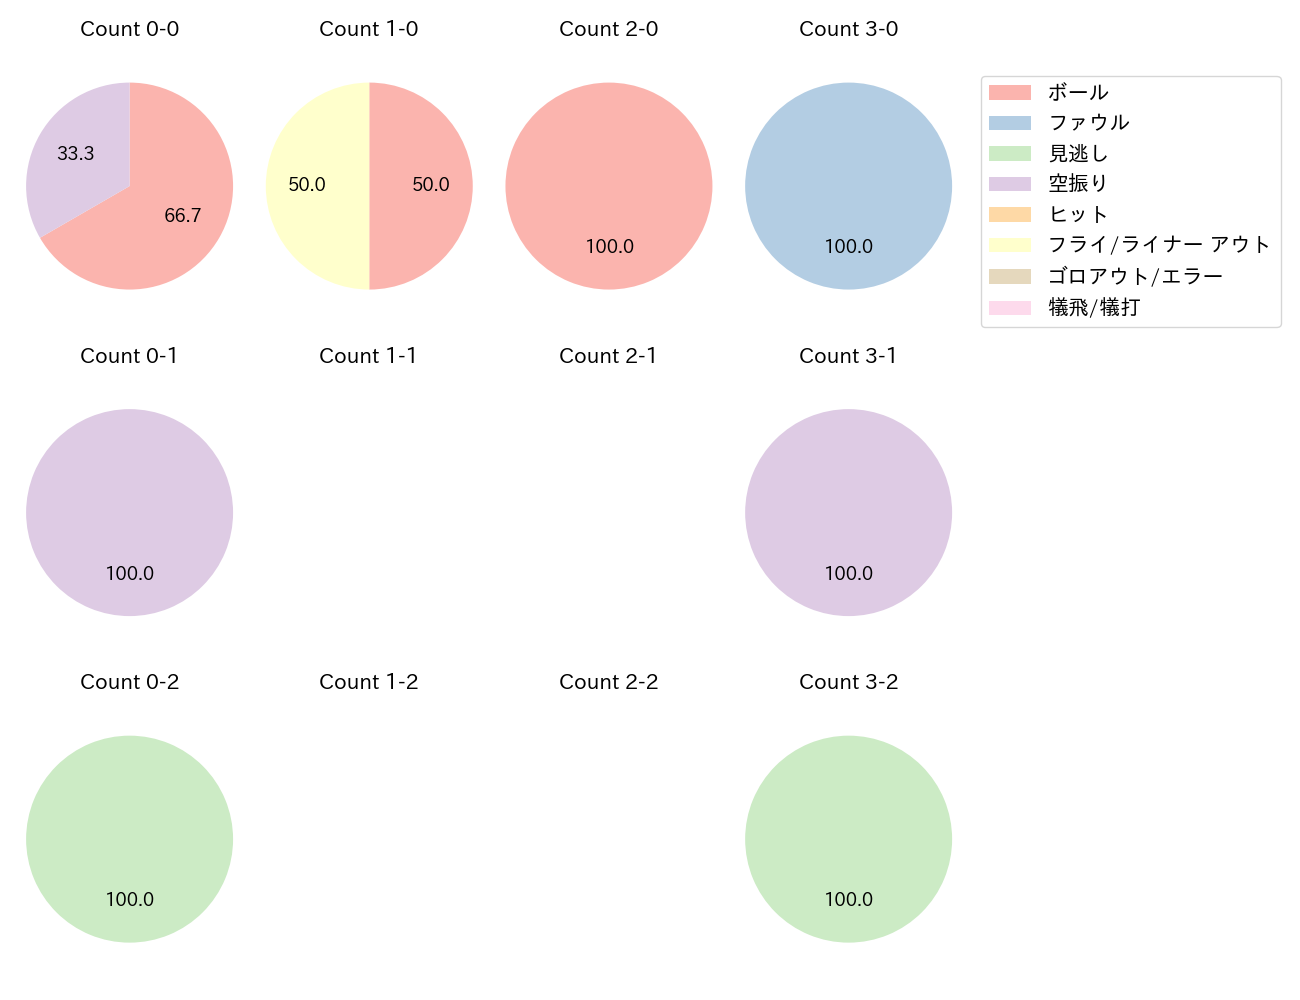 正木 智也の球数分布(2023年3月)